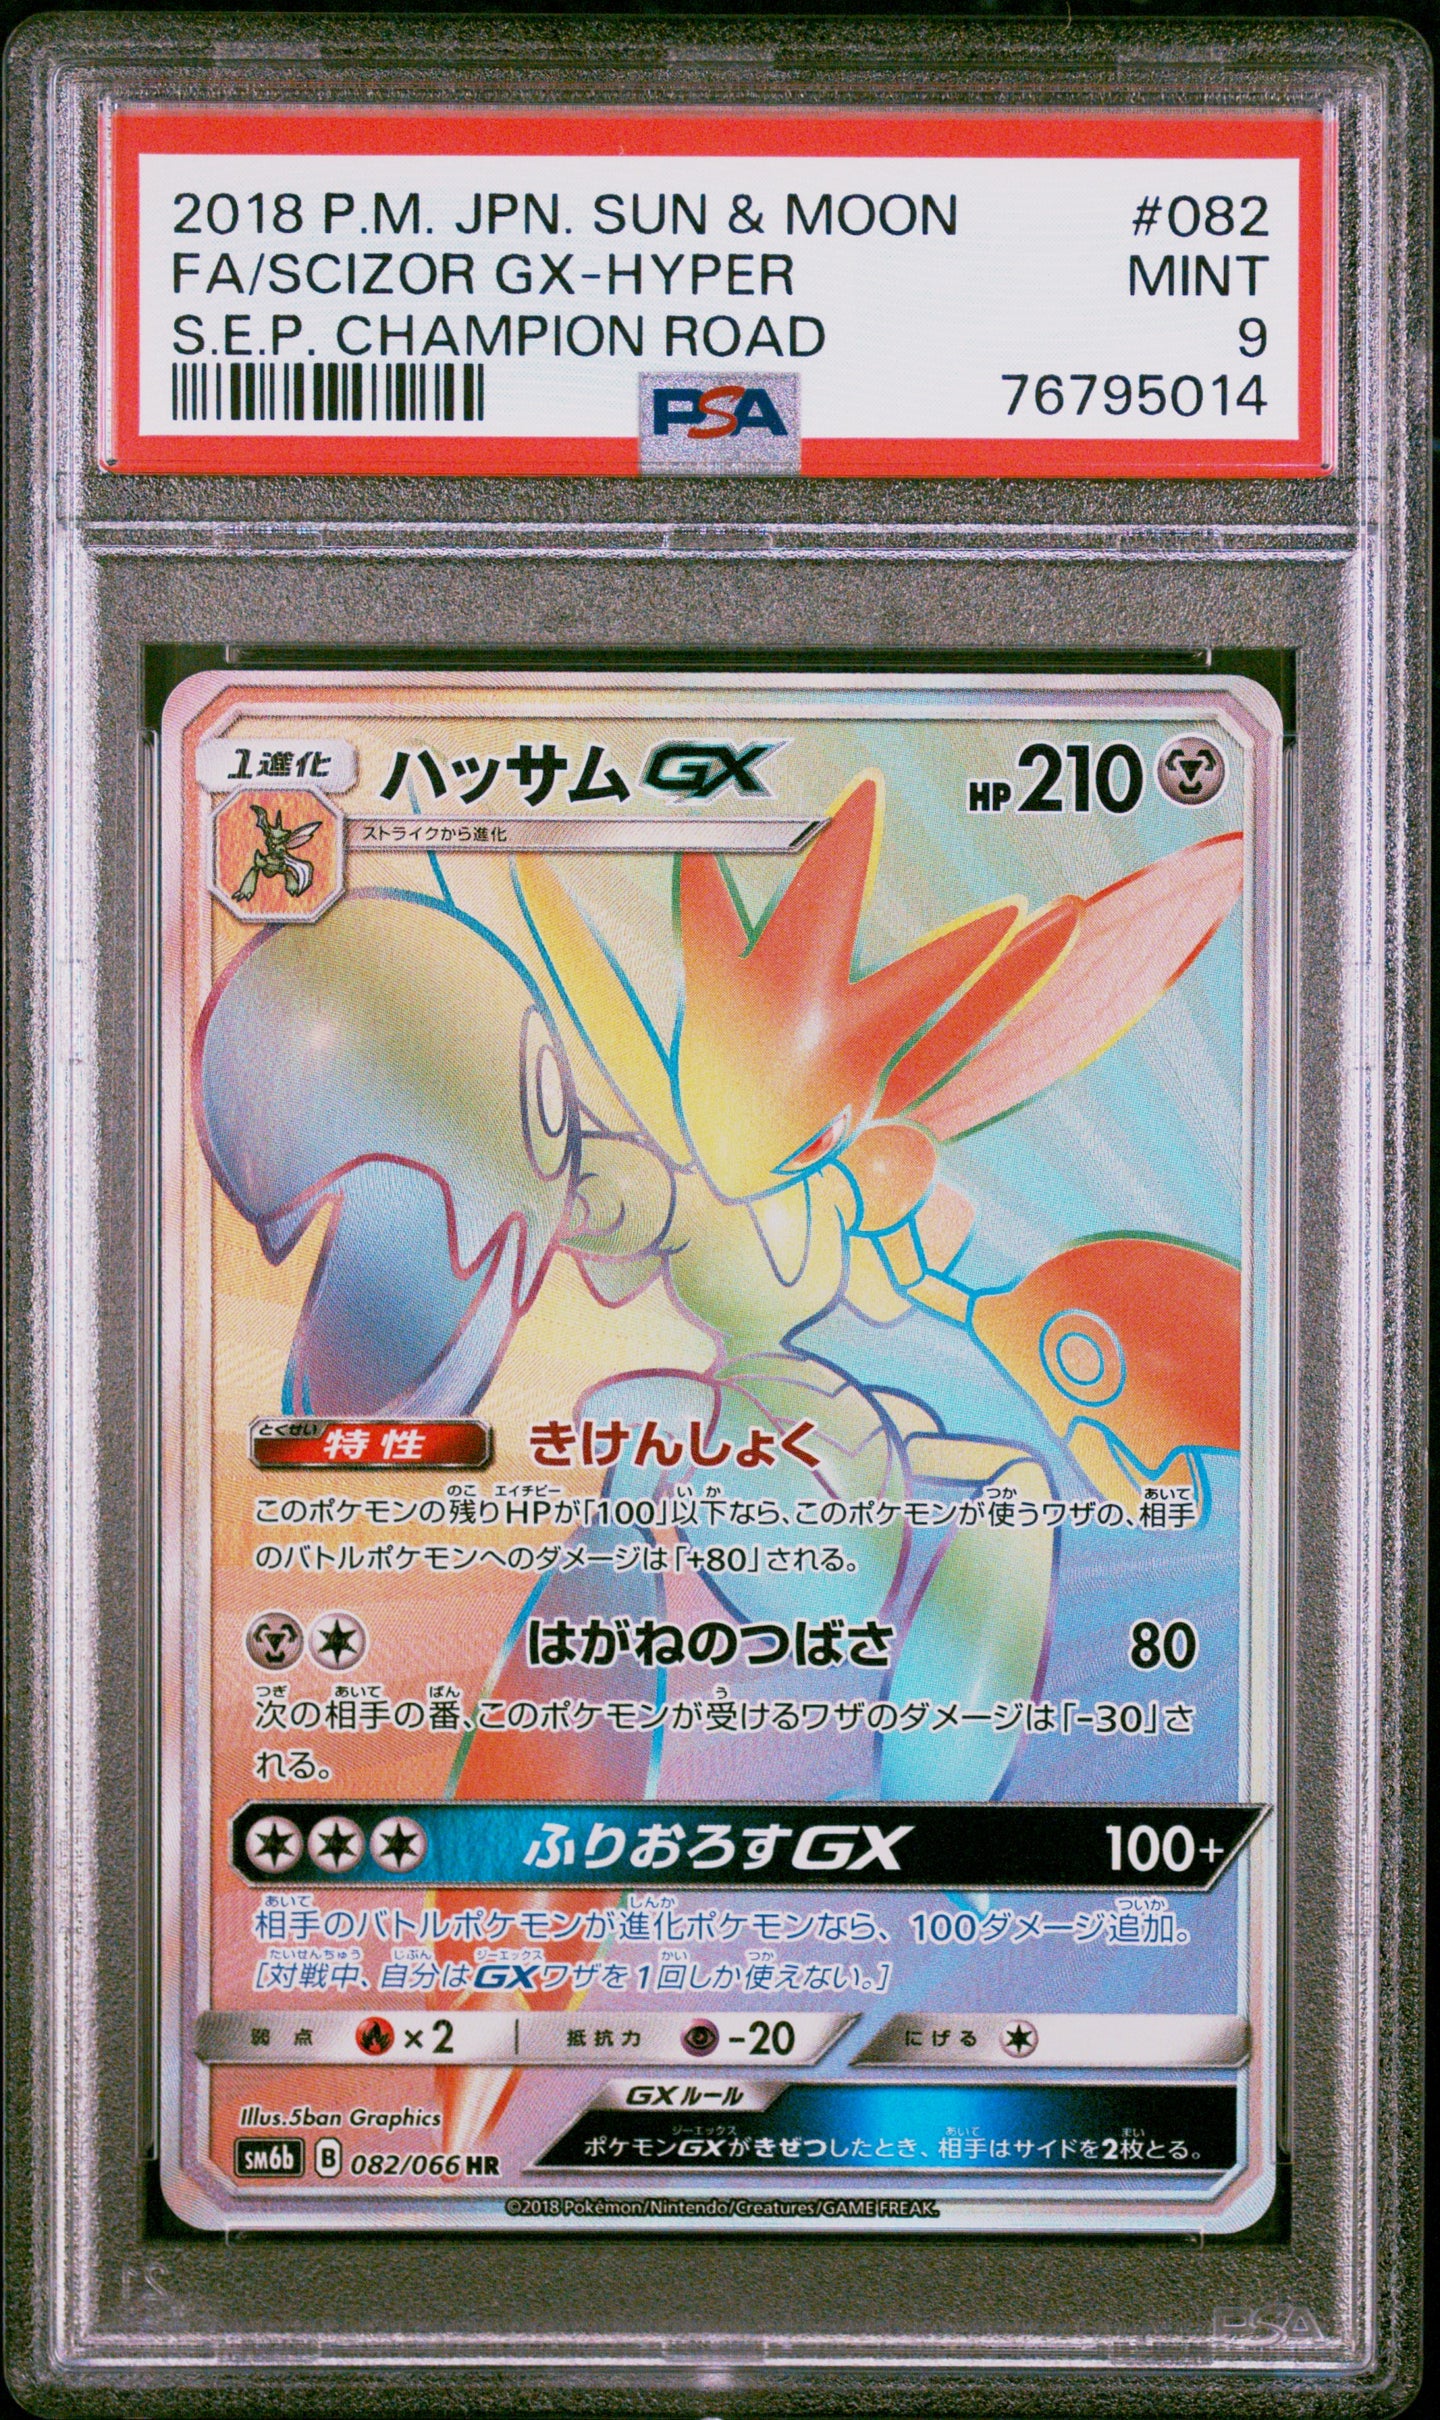 PSA 9 Japanese Scizor GX Rainbow Rare (Graded Card)